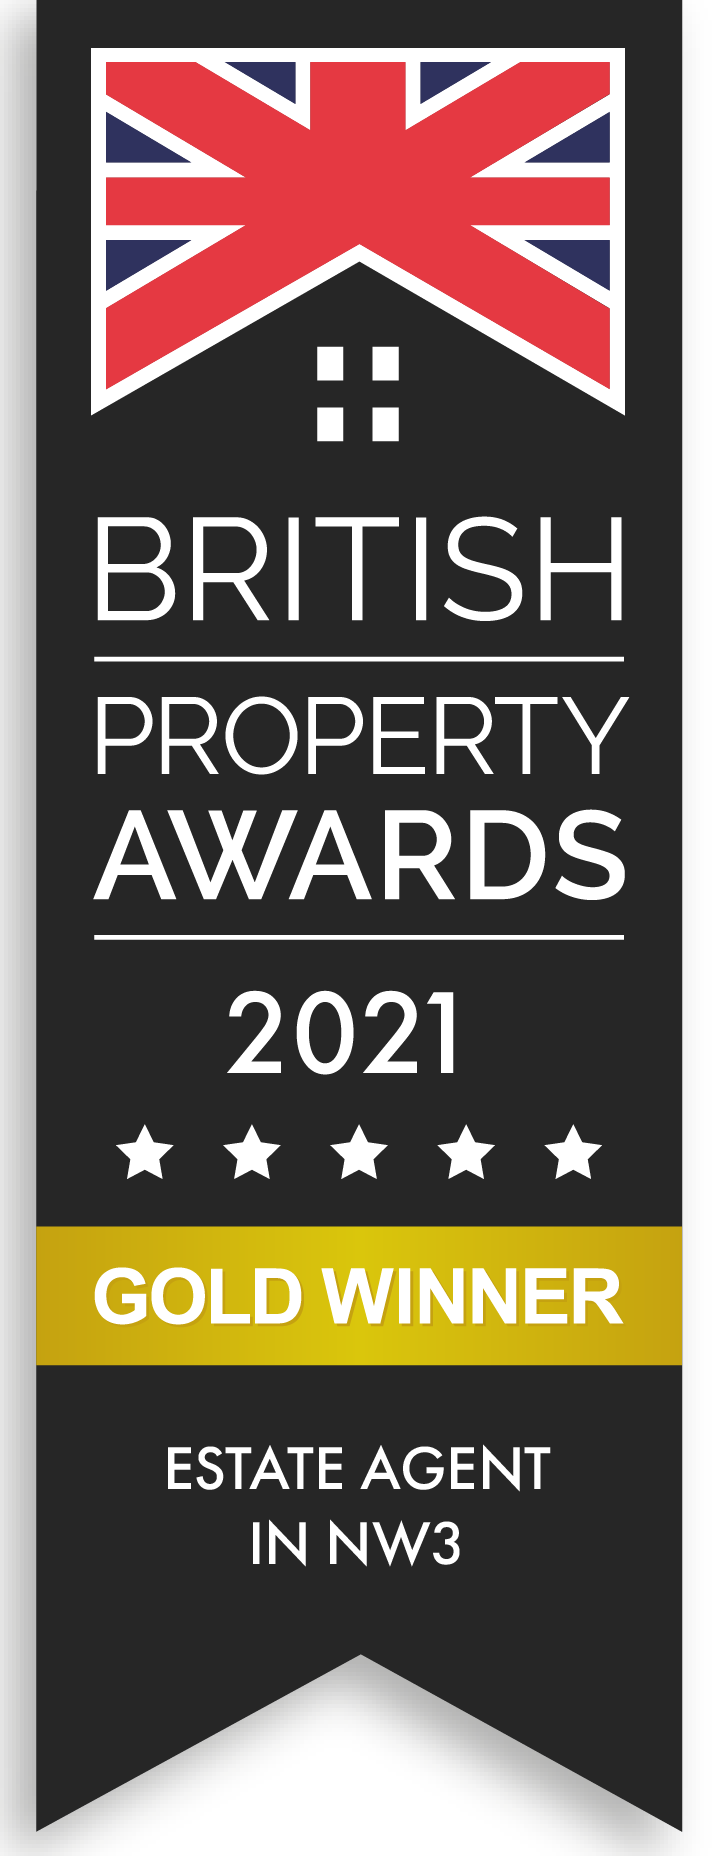 British Property Awards 2021: Gold Winner